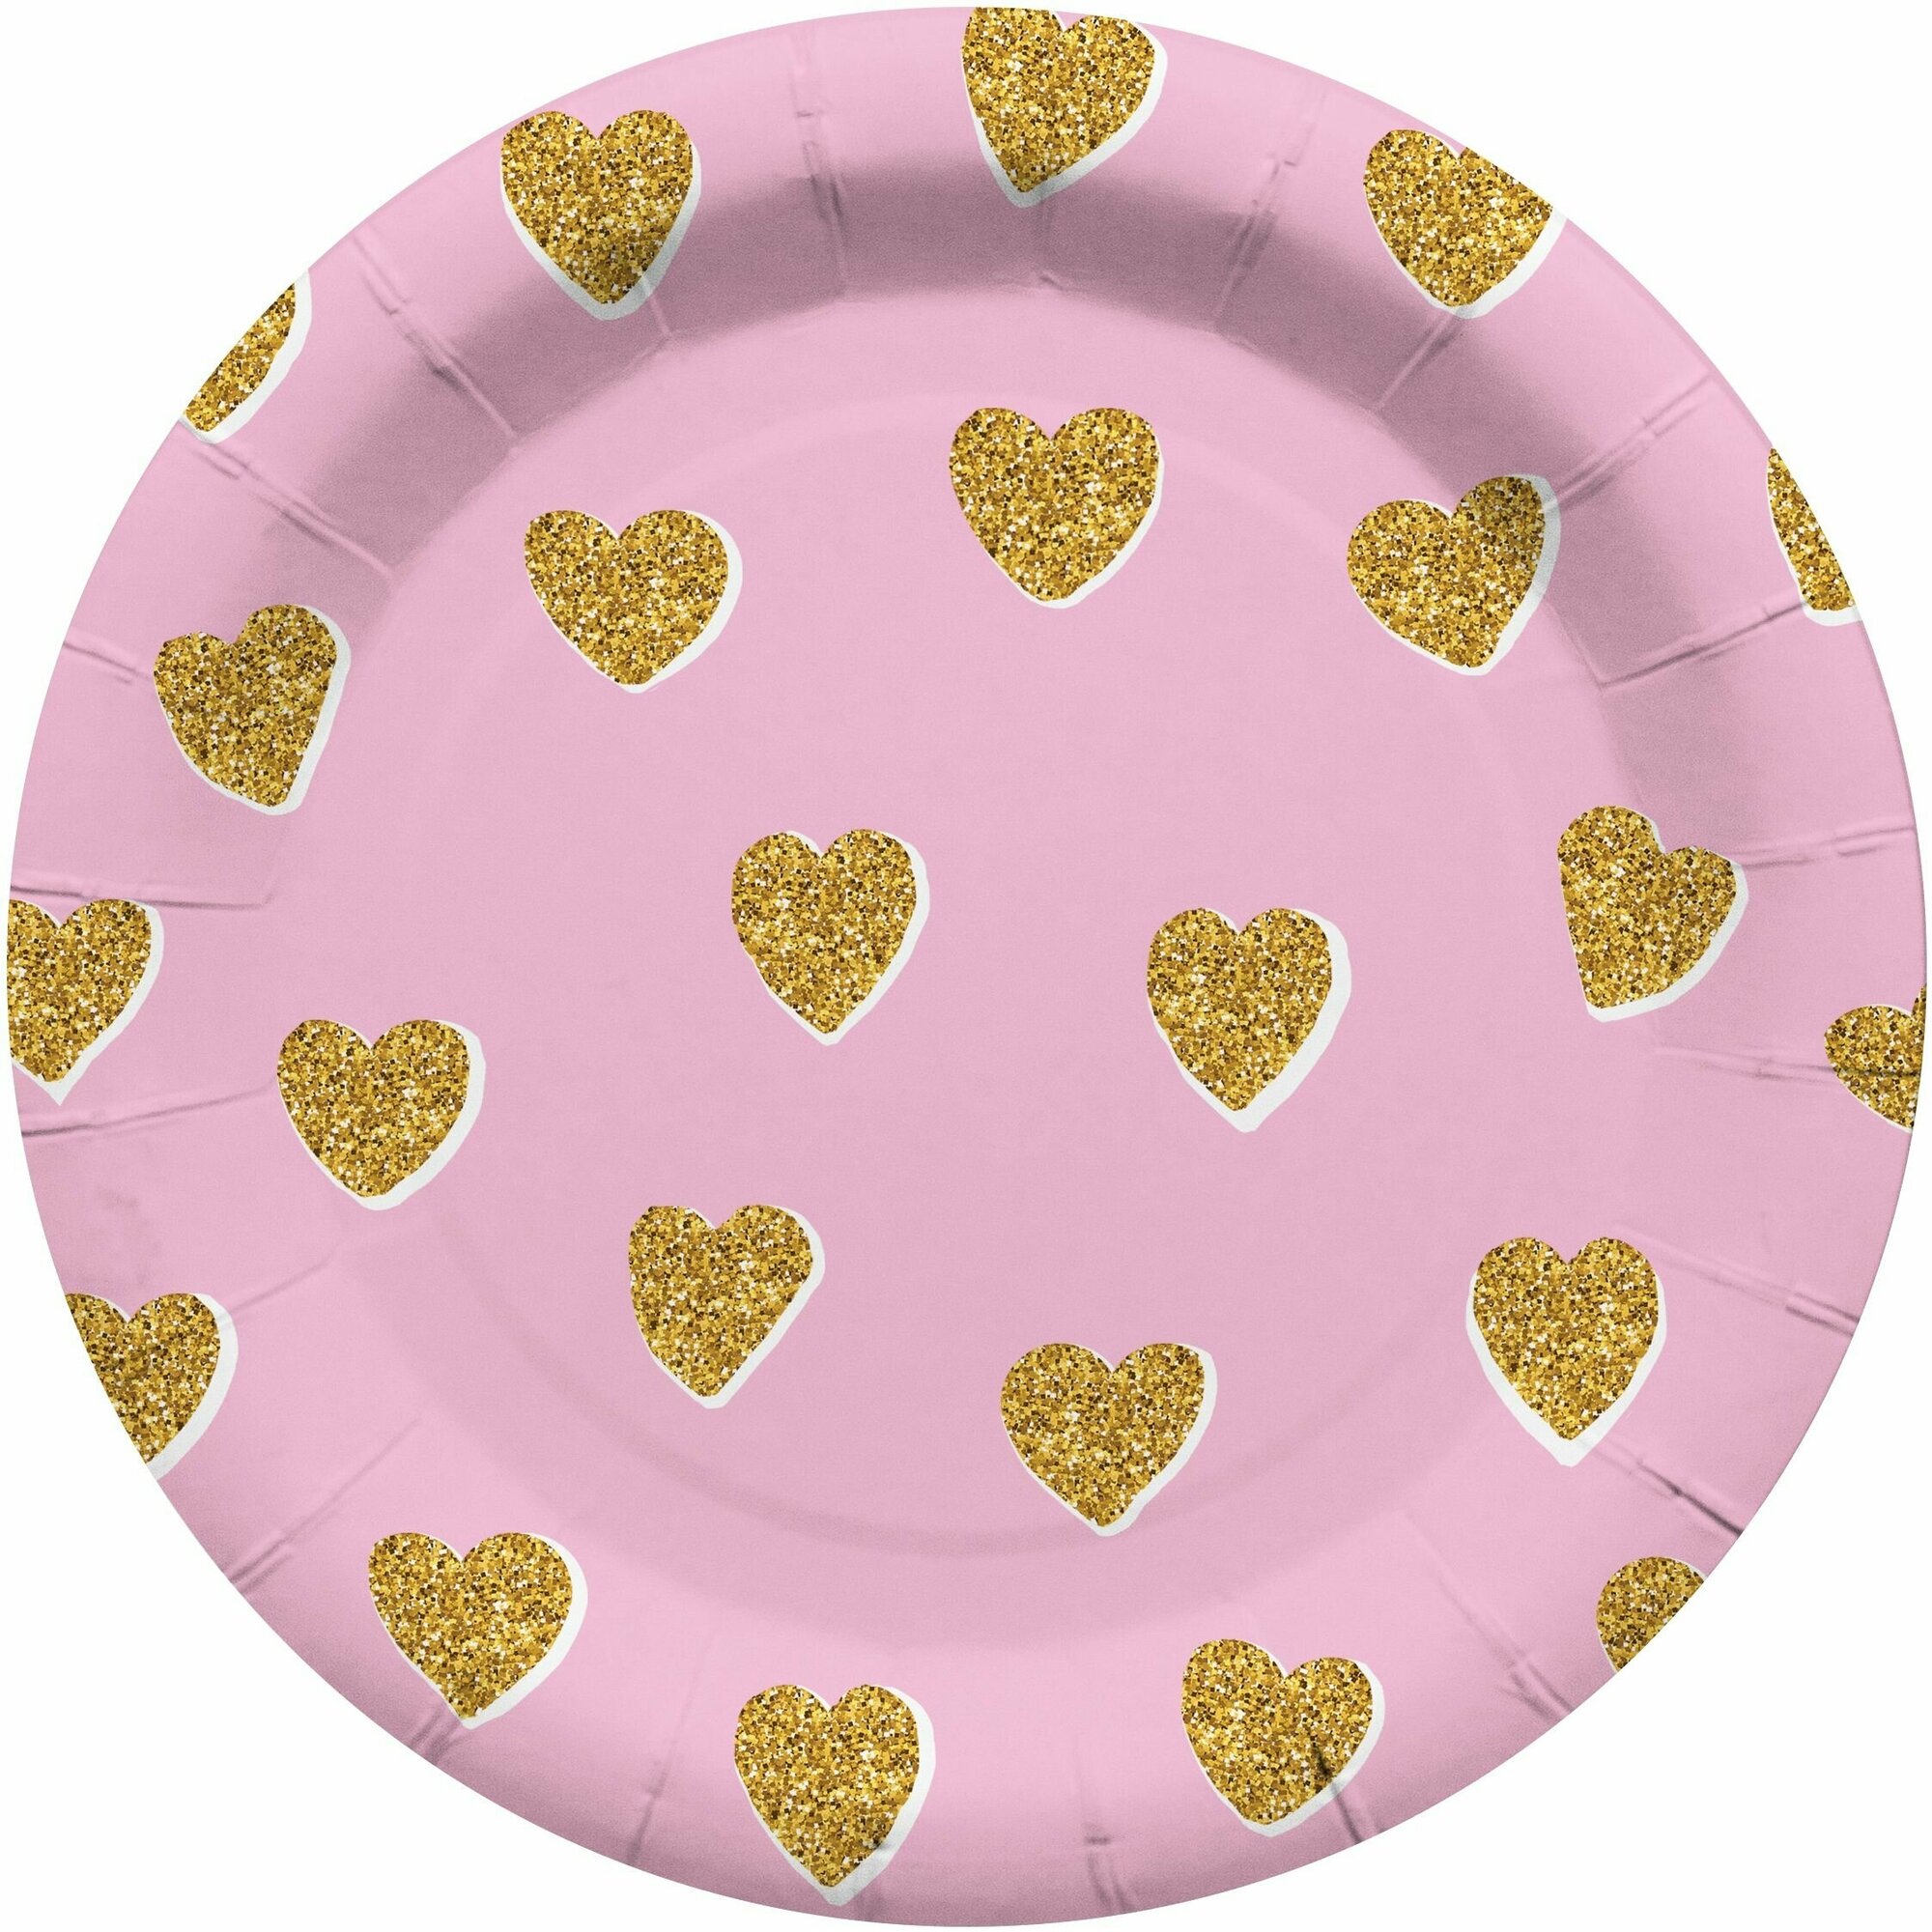 Тарелки одноразовые бумажные/Набор одноразовых бумажных тарелок для праздника (7'/18 см) Сердечки, Розовый, 6 шт.